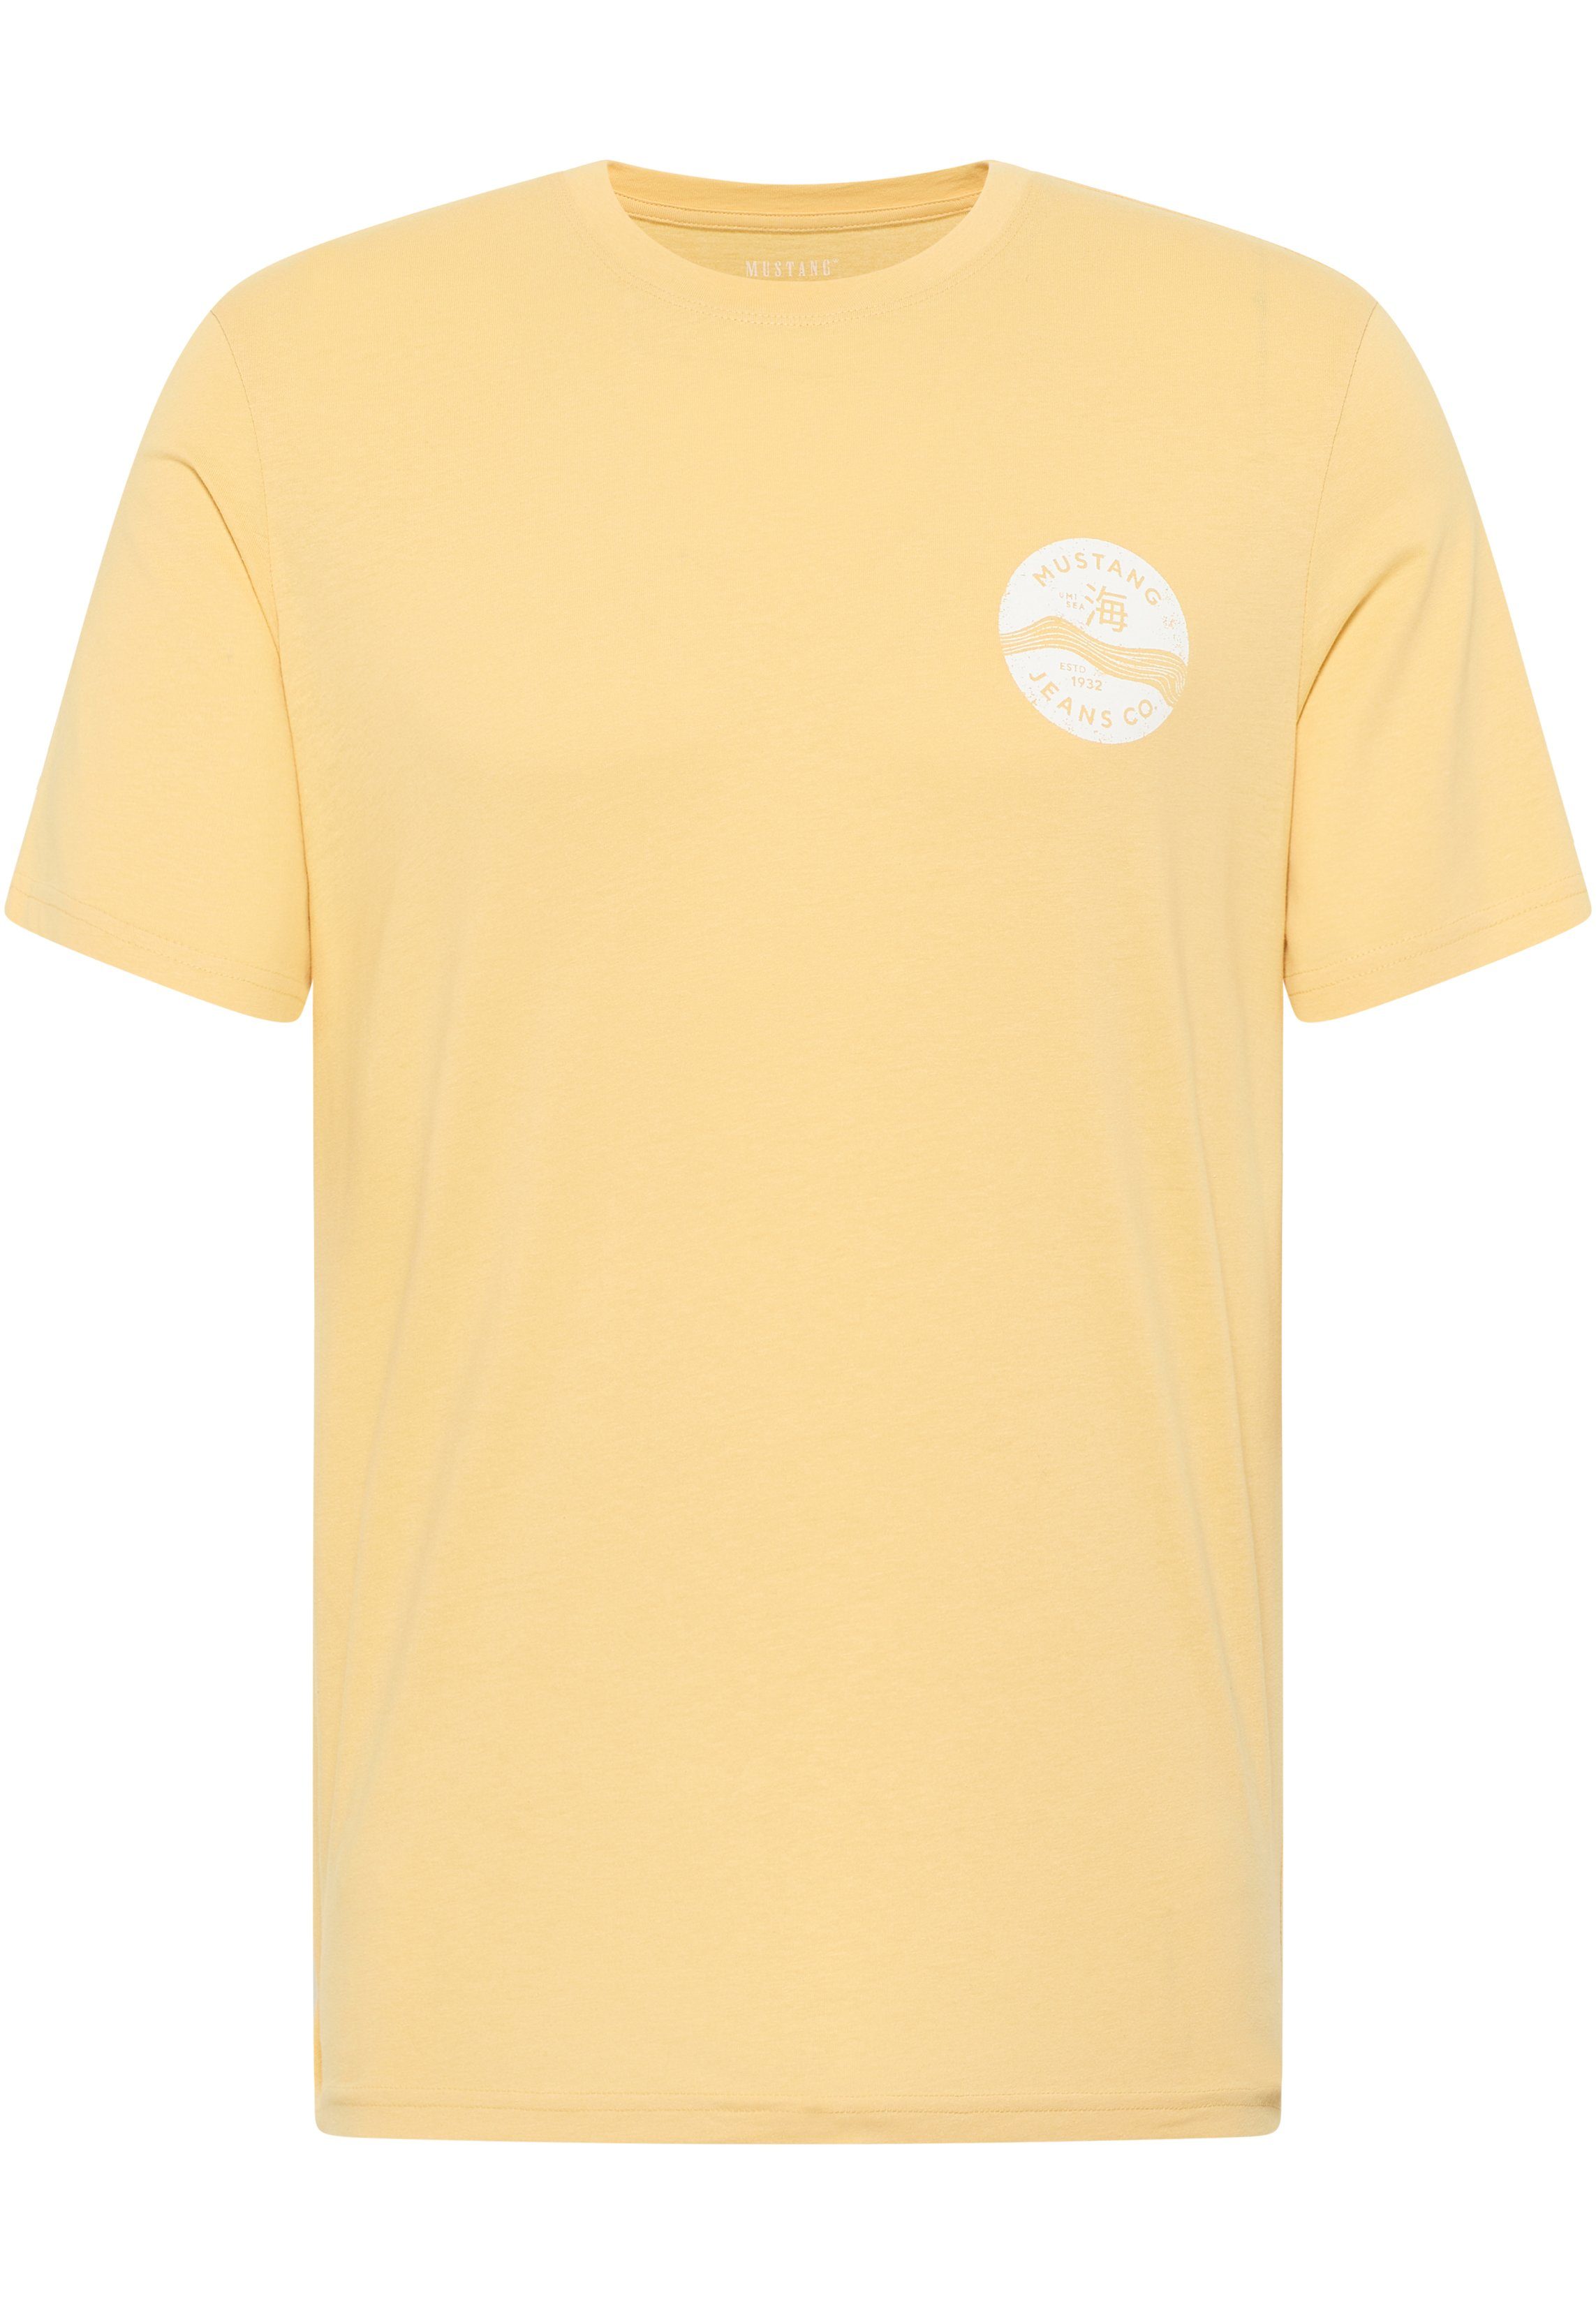 MUSTANG Kurzarmshirt Mustang Print-Shirt gelb